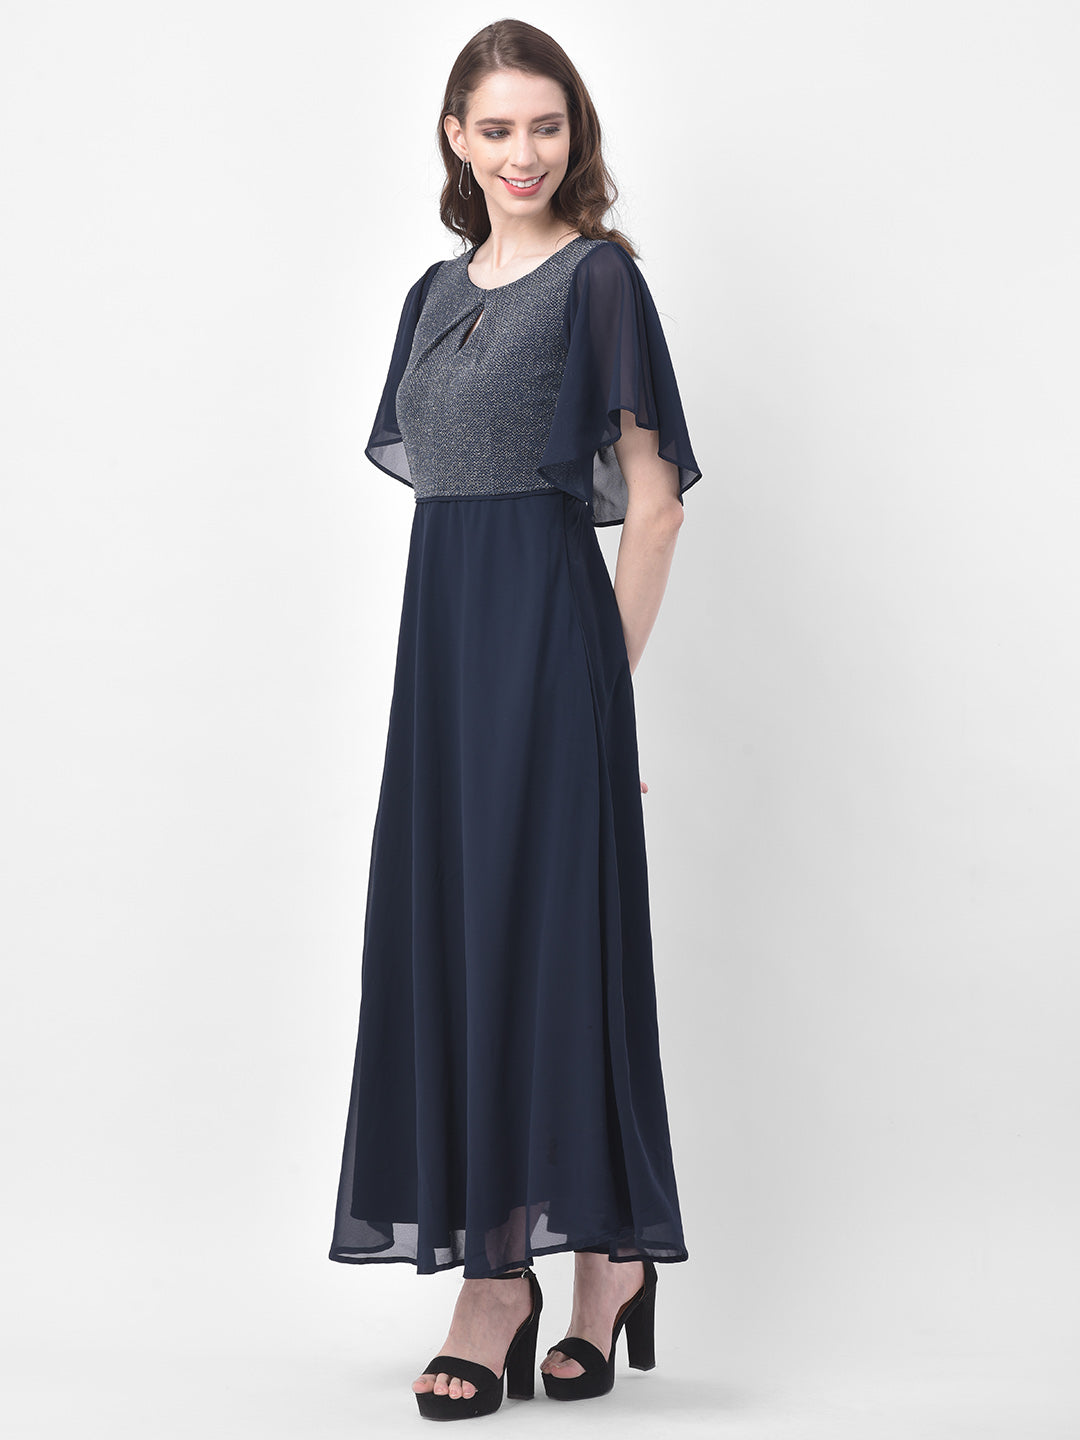 Blue Navy Half Sleeves Maxi Dress With Lurex